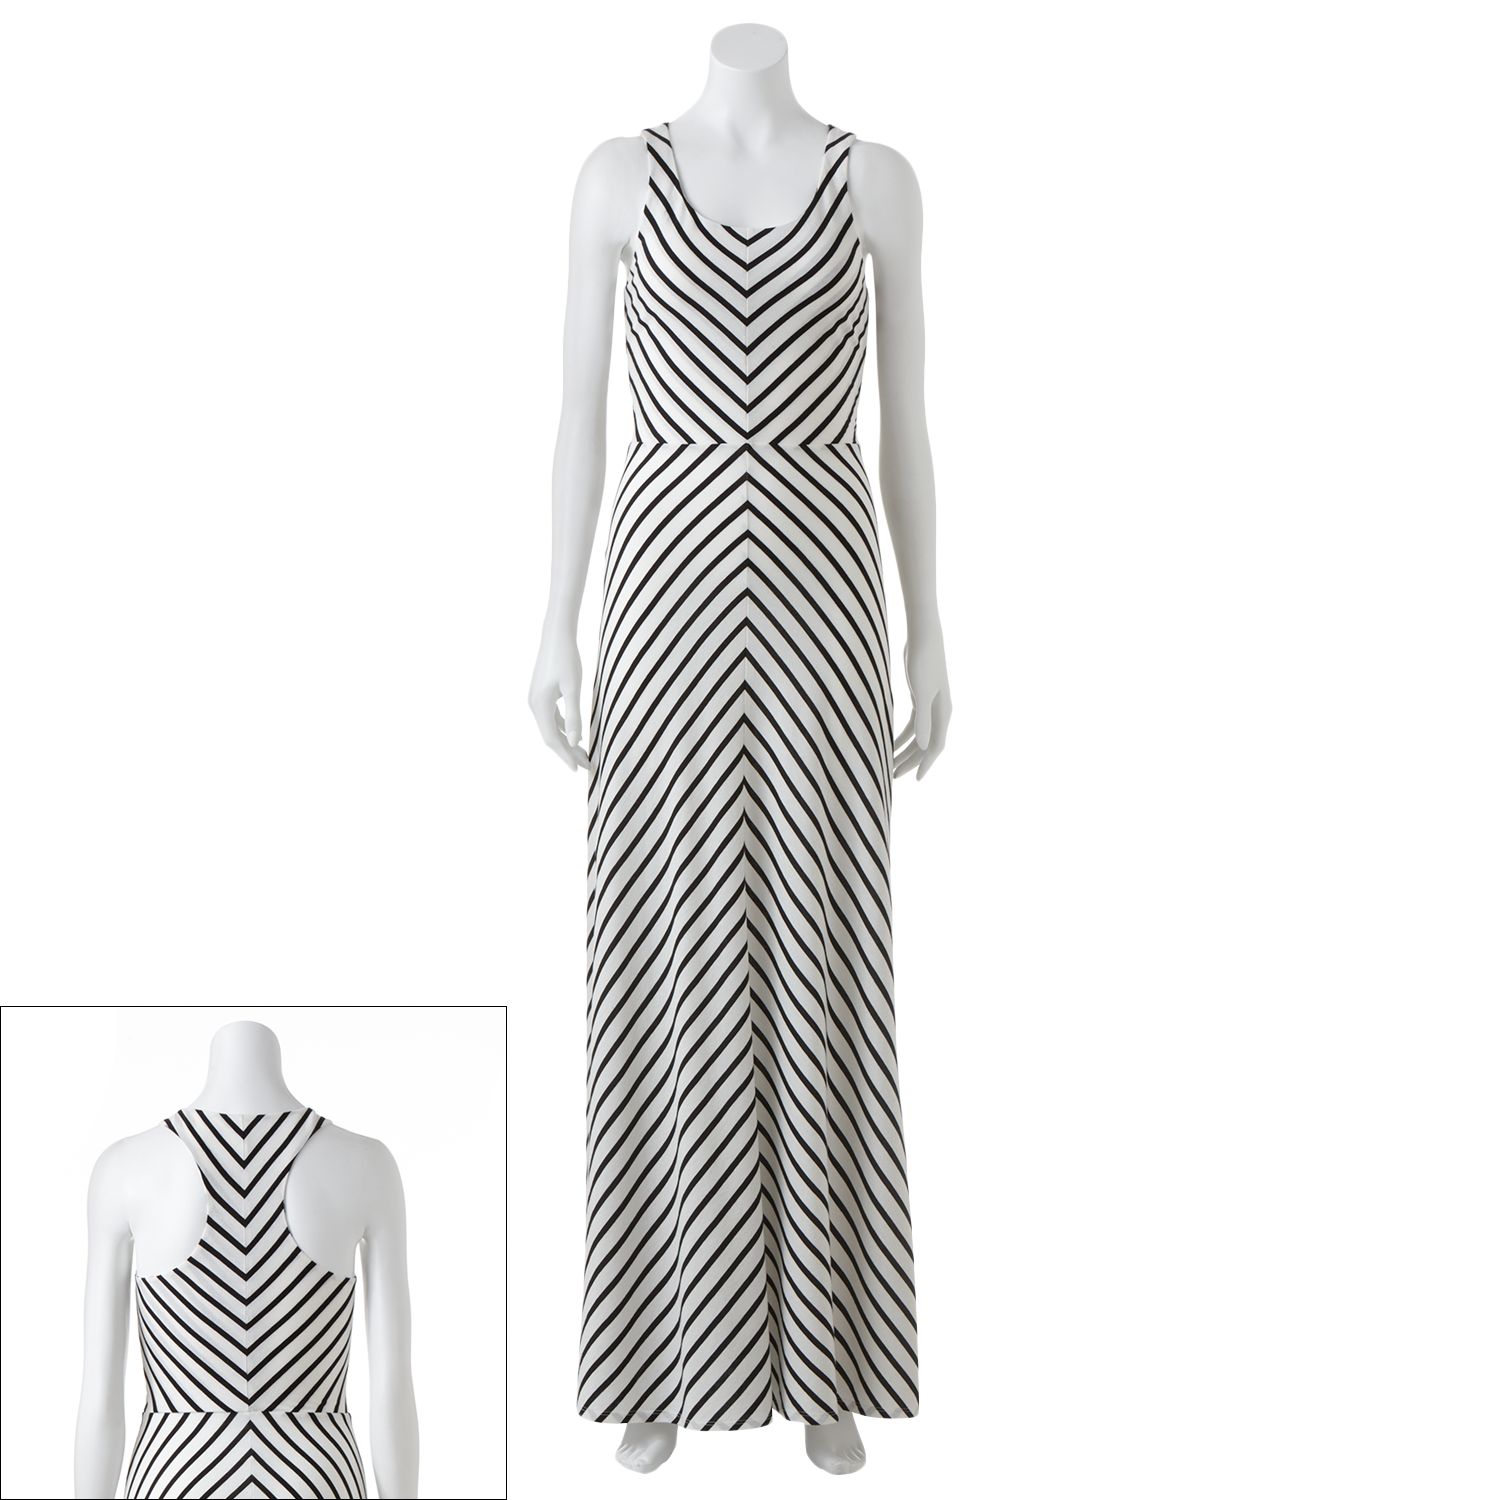 lauren conrad striped dress